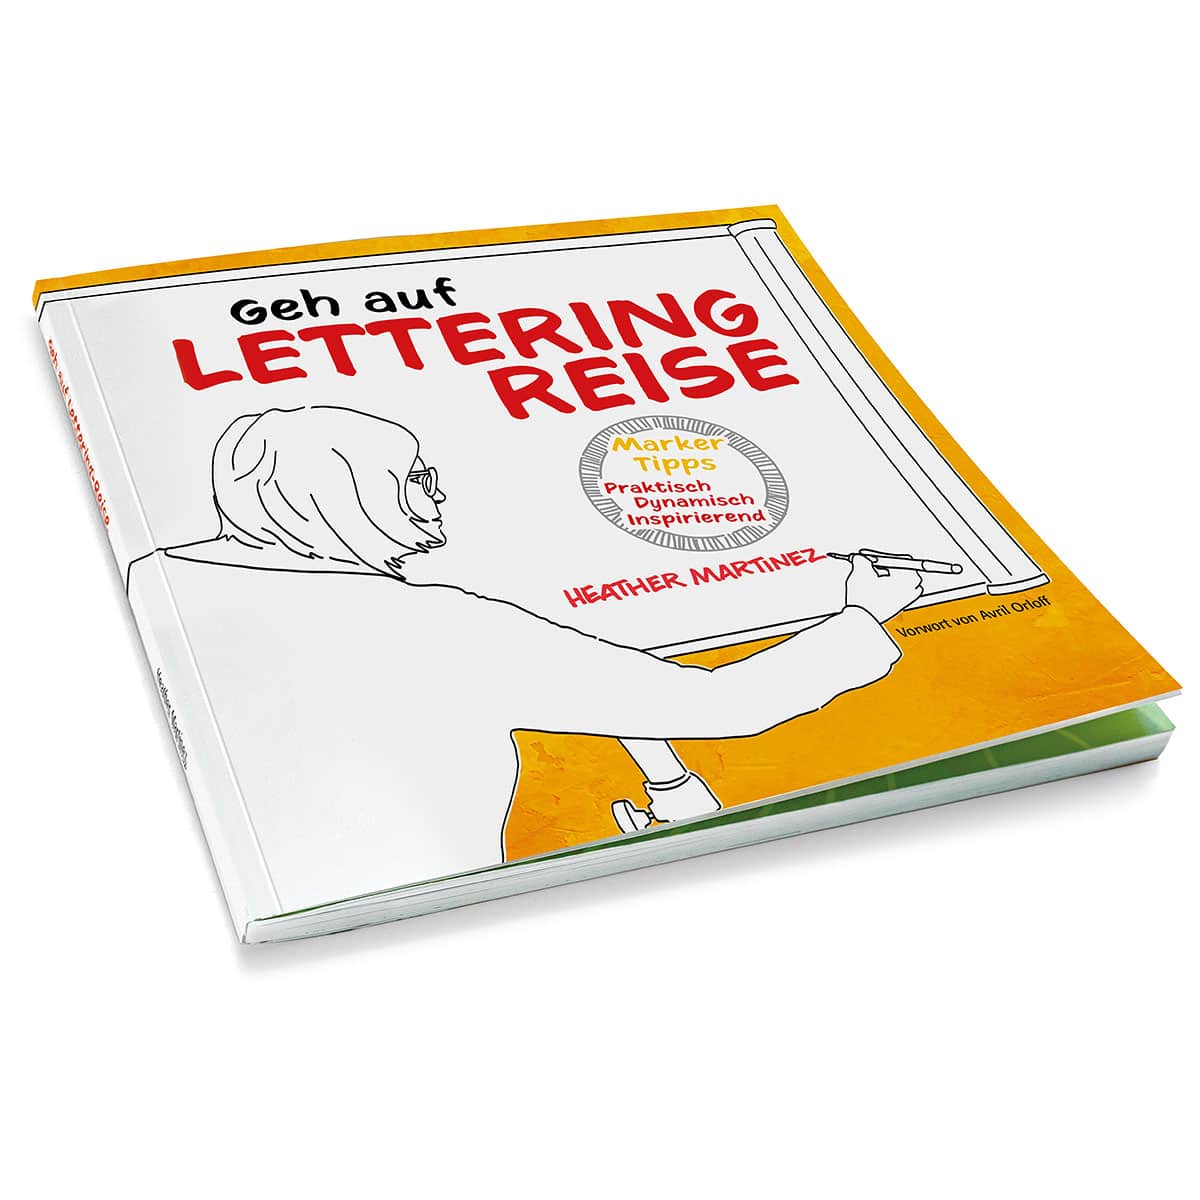 Geh auf Lettering Reise (German)